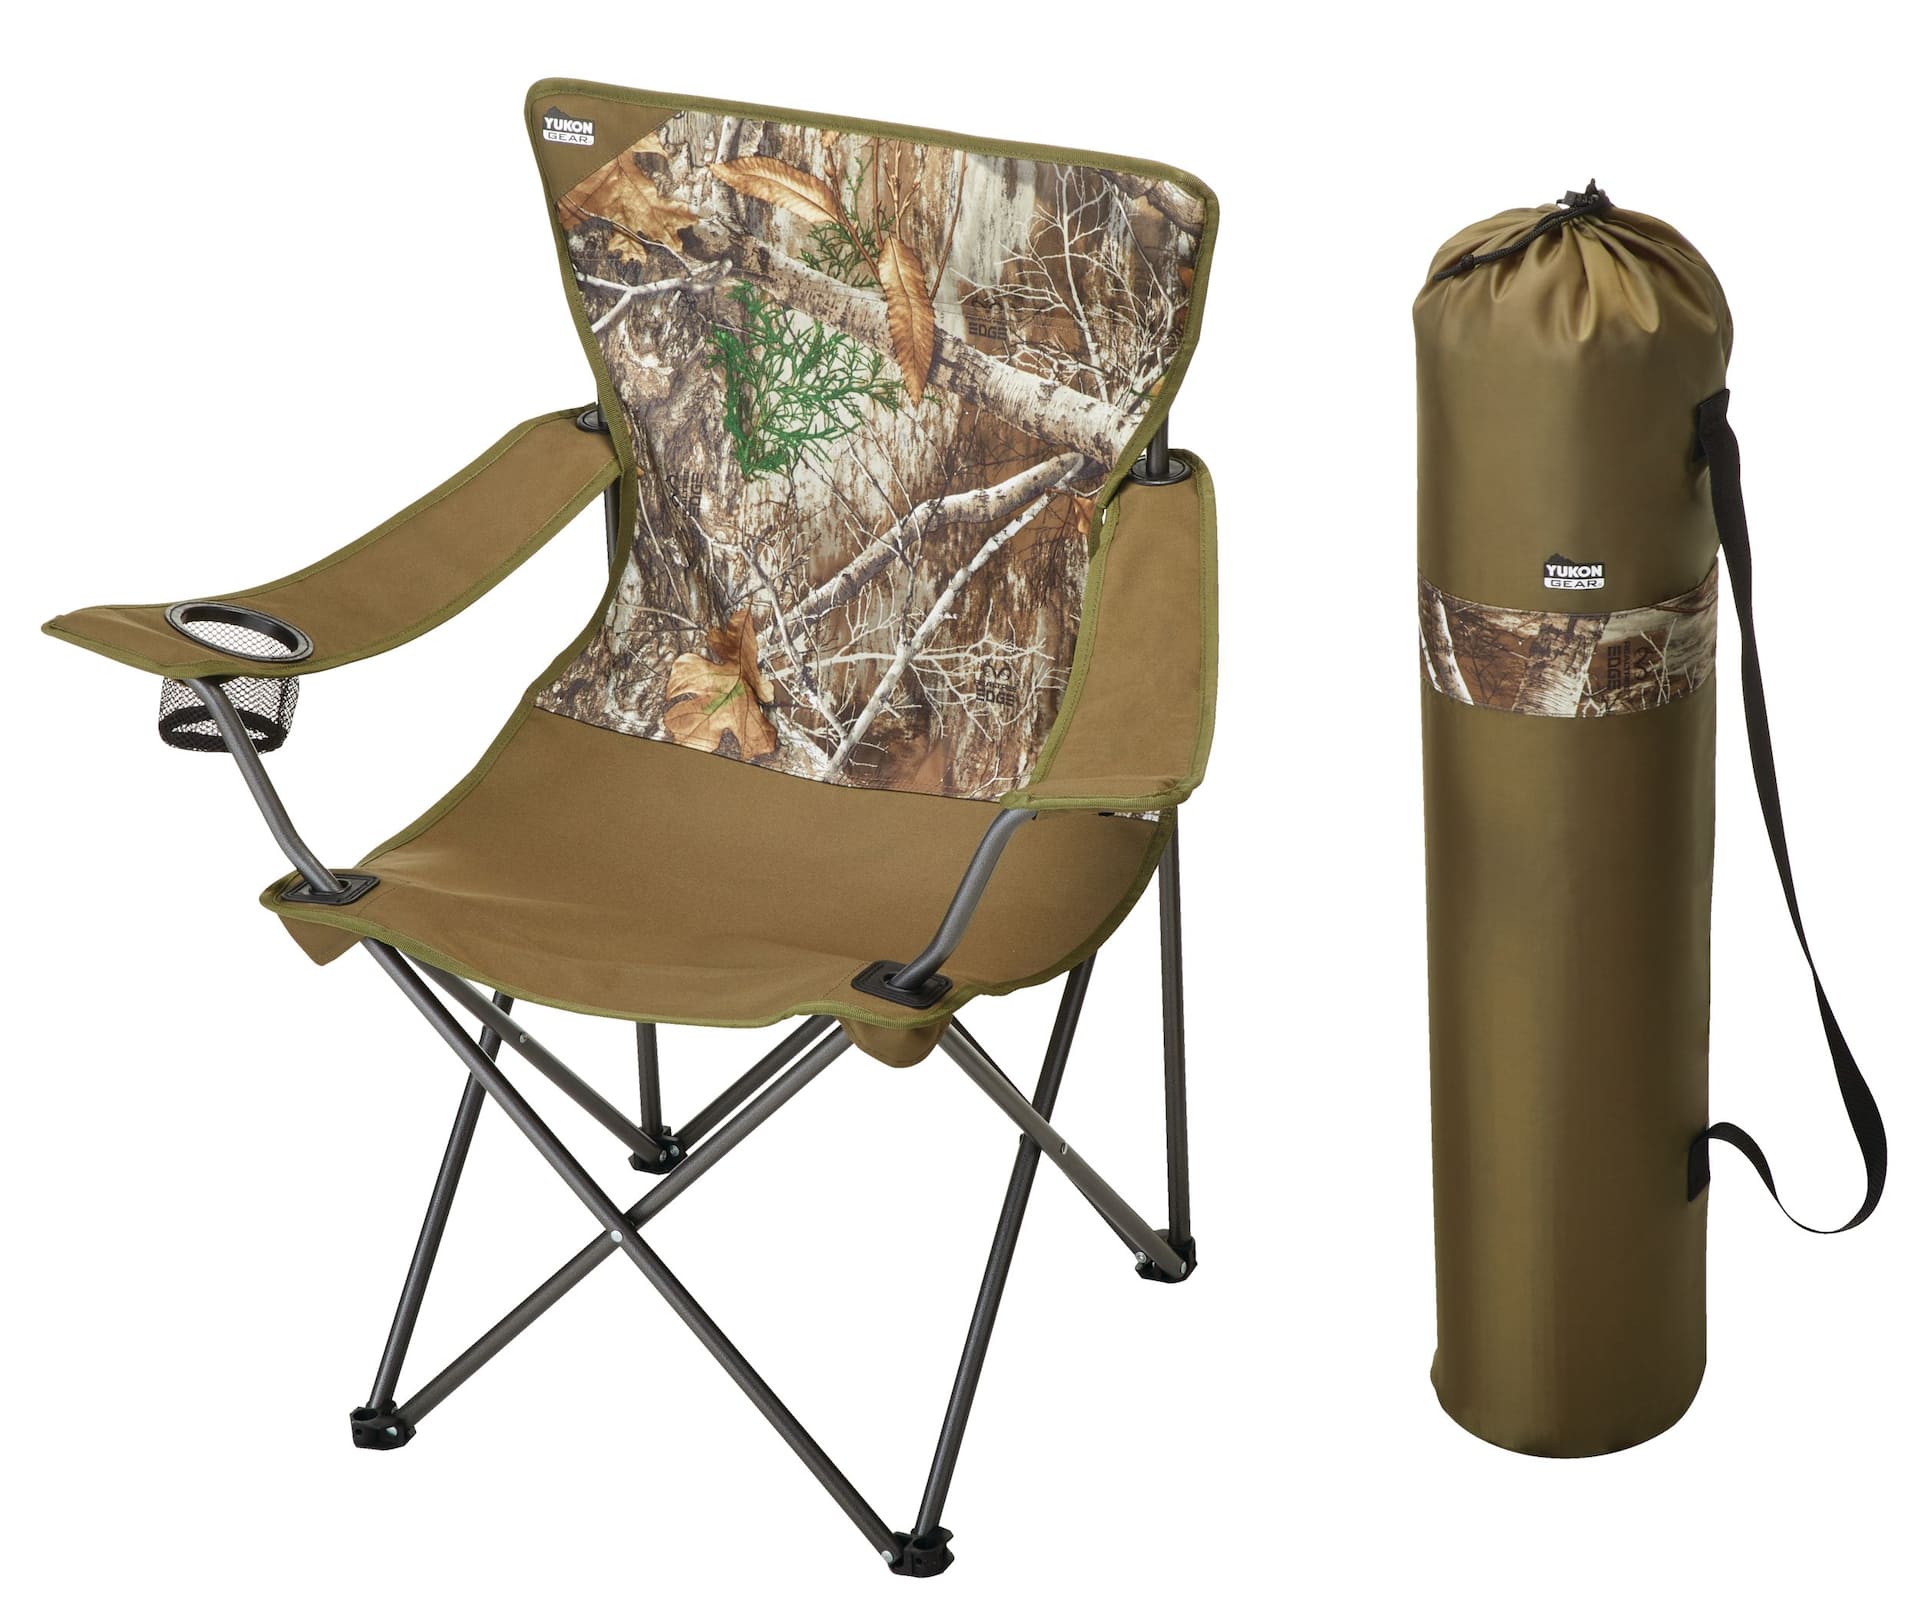 Yukon Gear Realtree Camo Portable Folding Camping/Hunting Quad